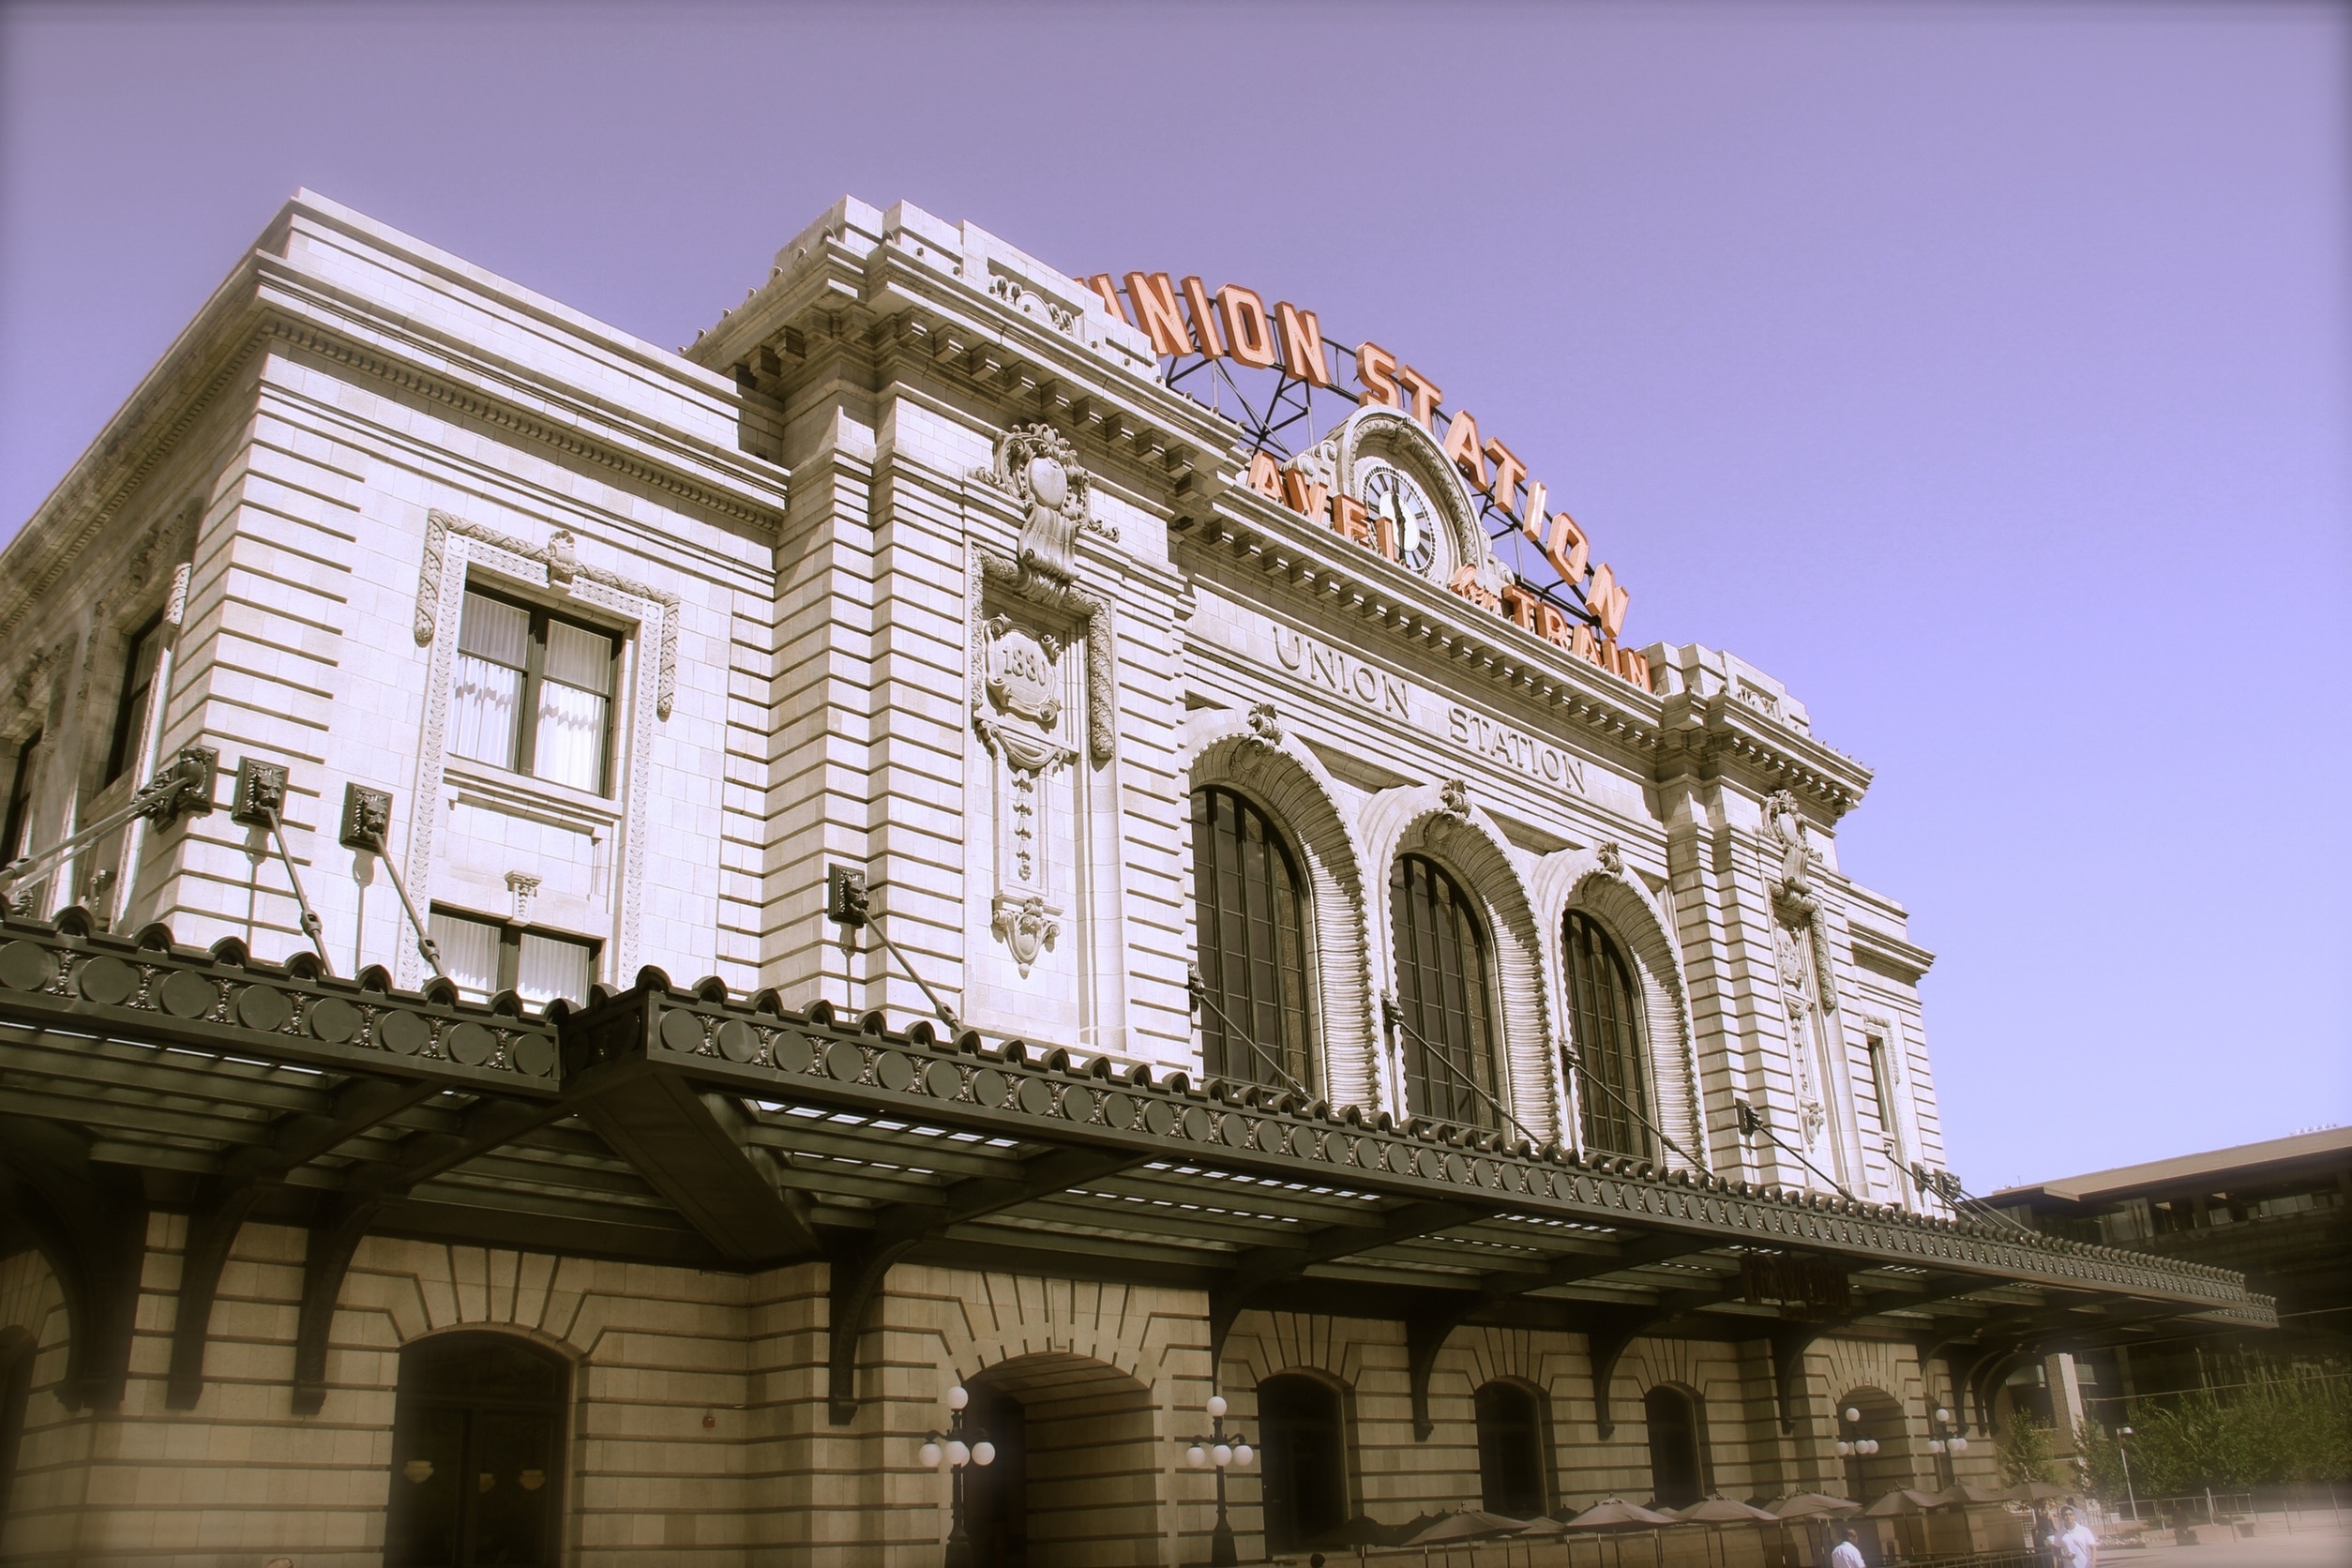 White Union Station Building Under Purple Sky